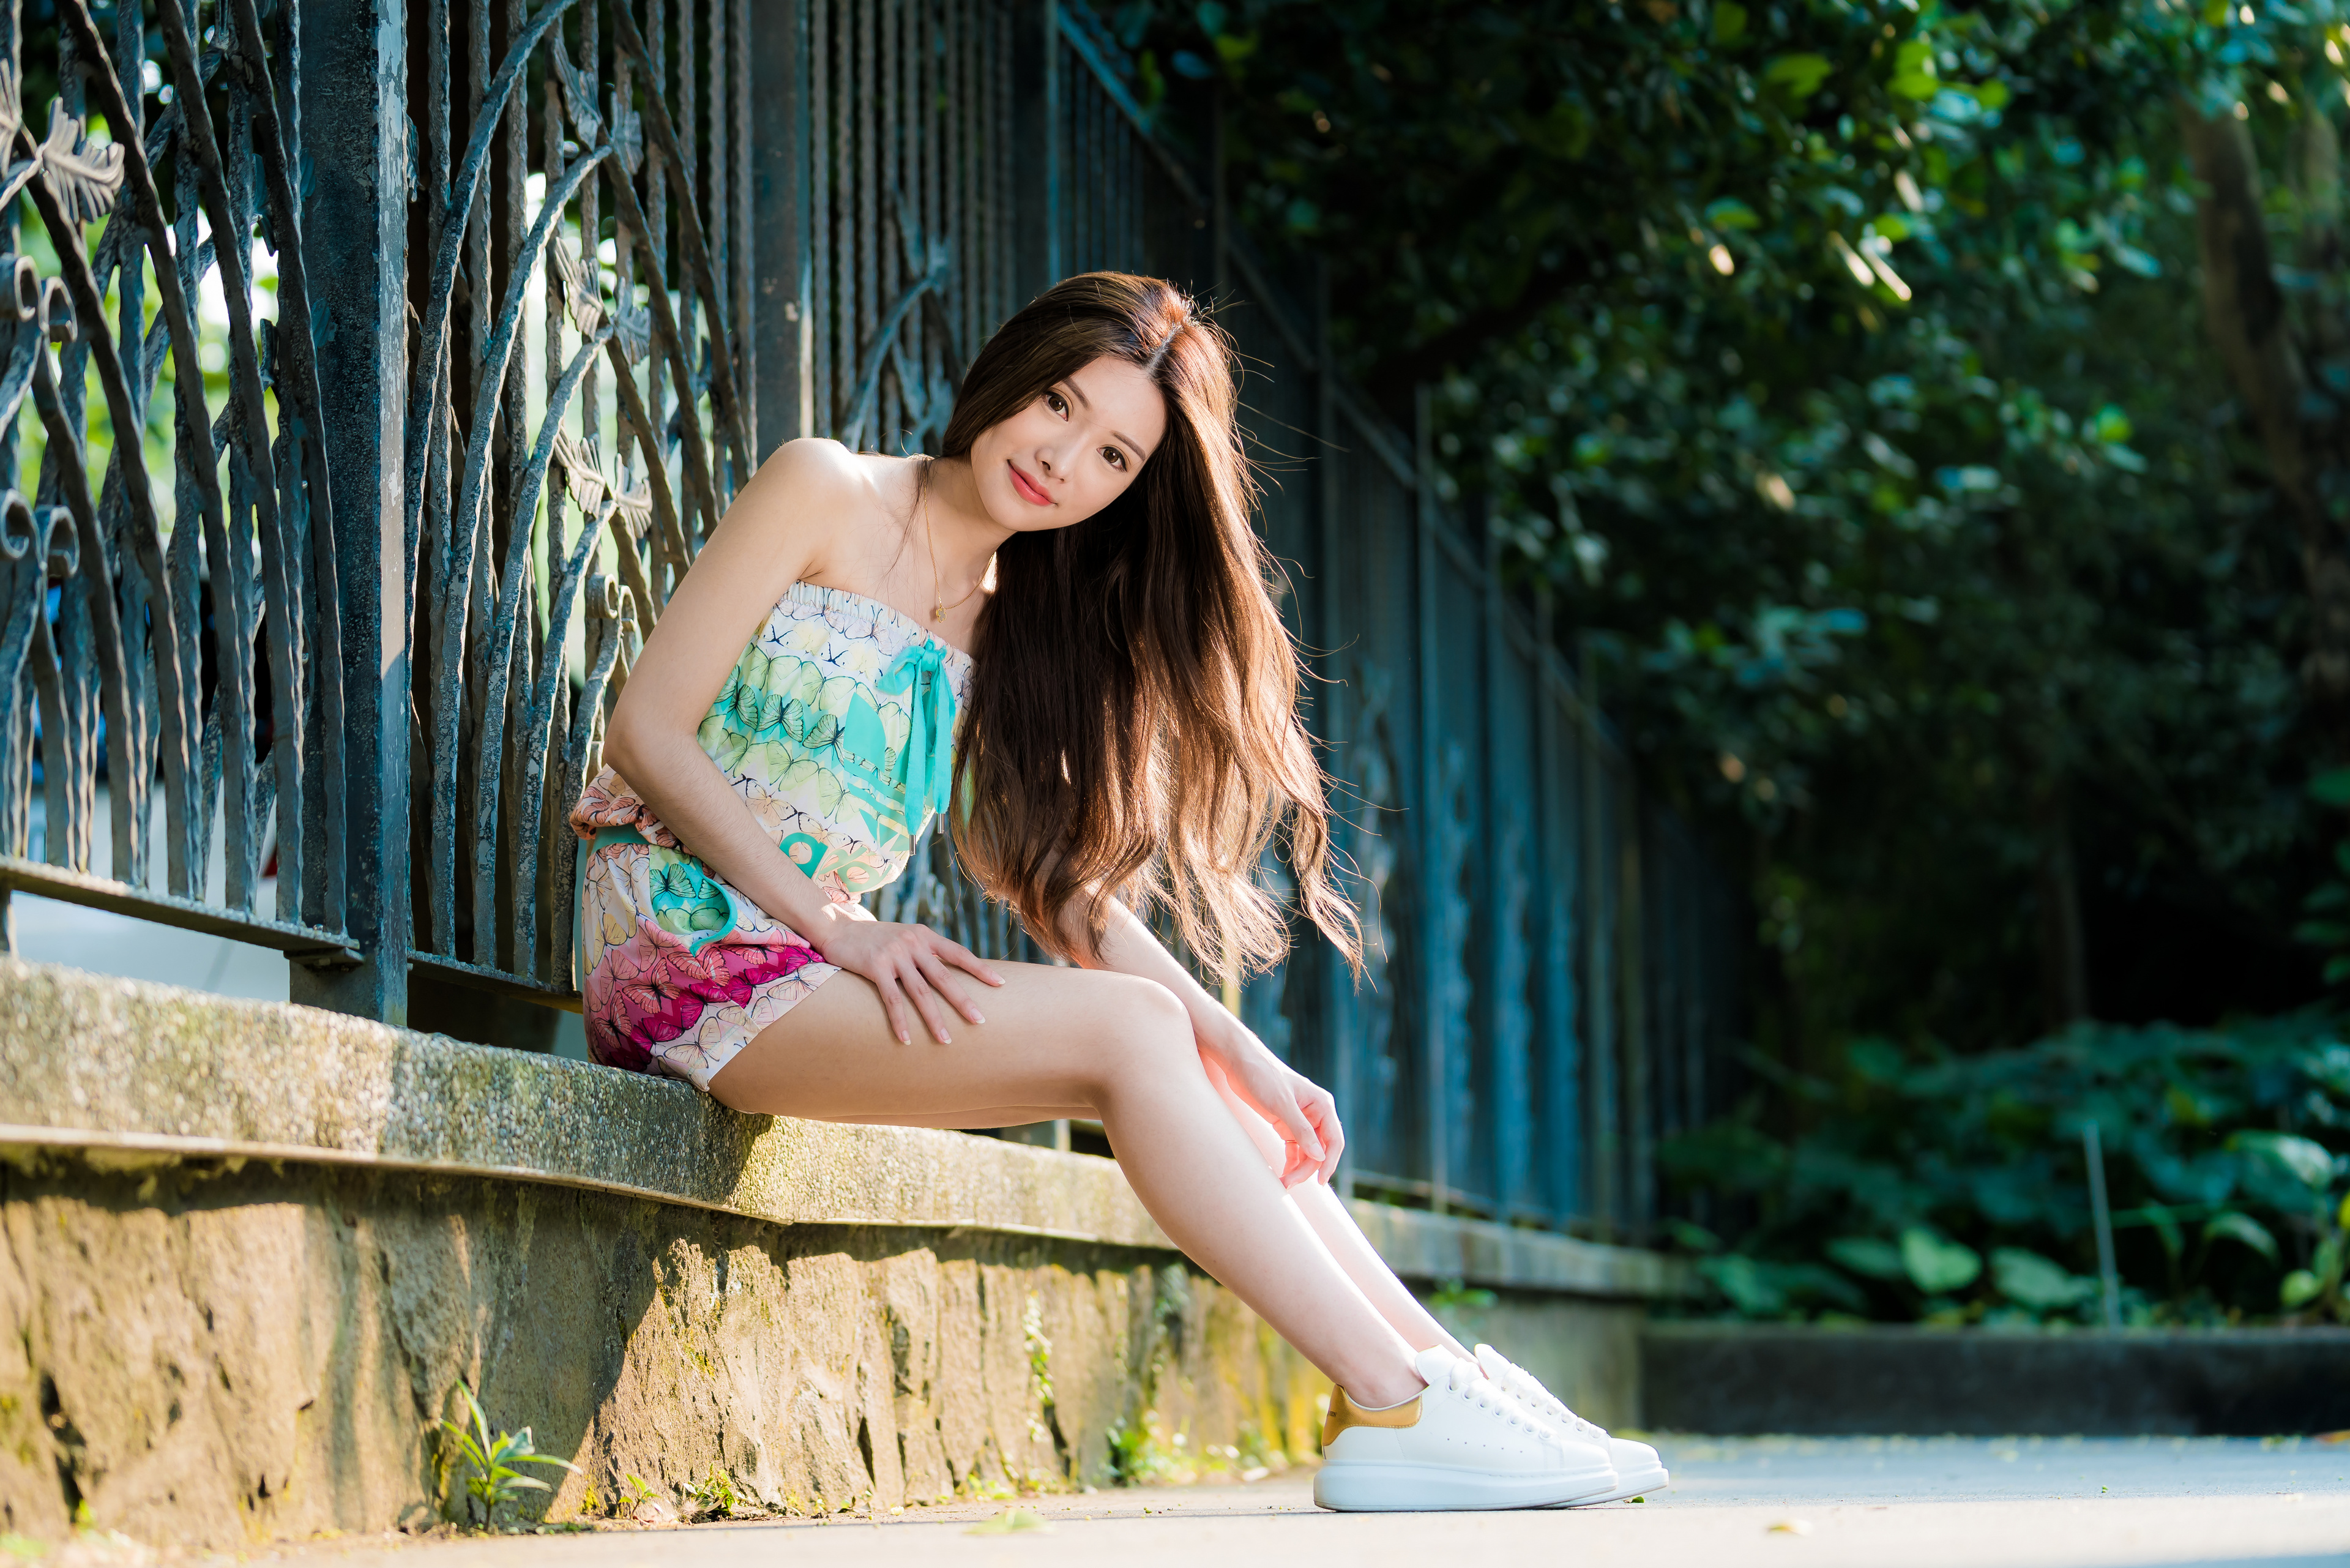 Asian Model Women Long Hair Dark Hair Sitting Leaning Fence Shorts Shirt Necklace 3840x2562